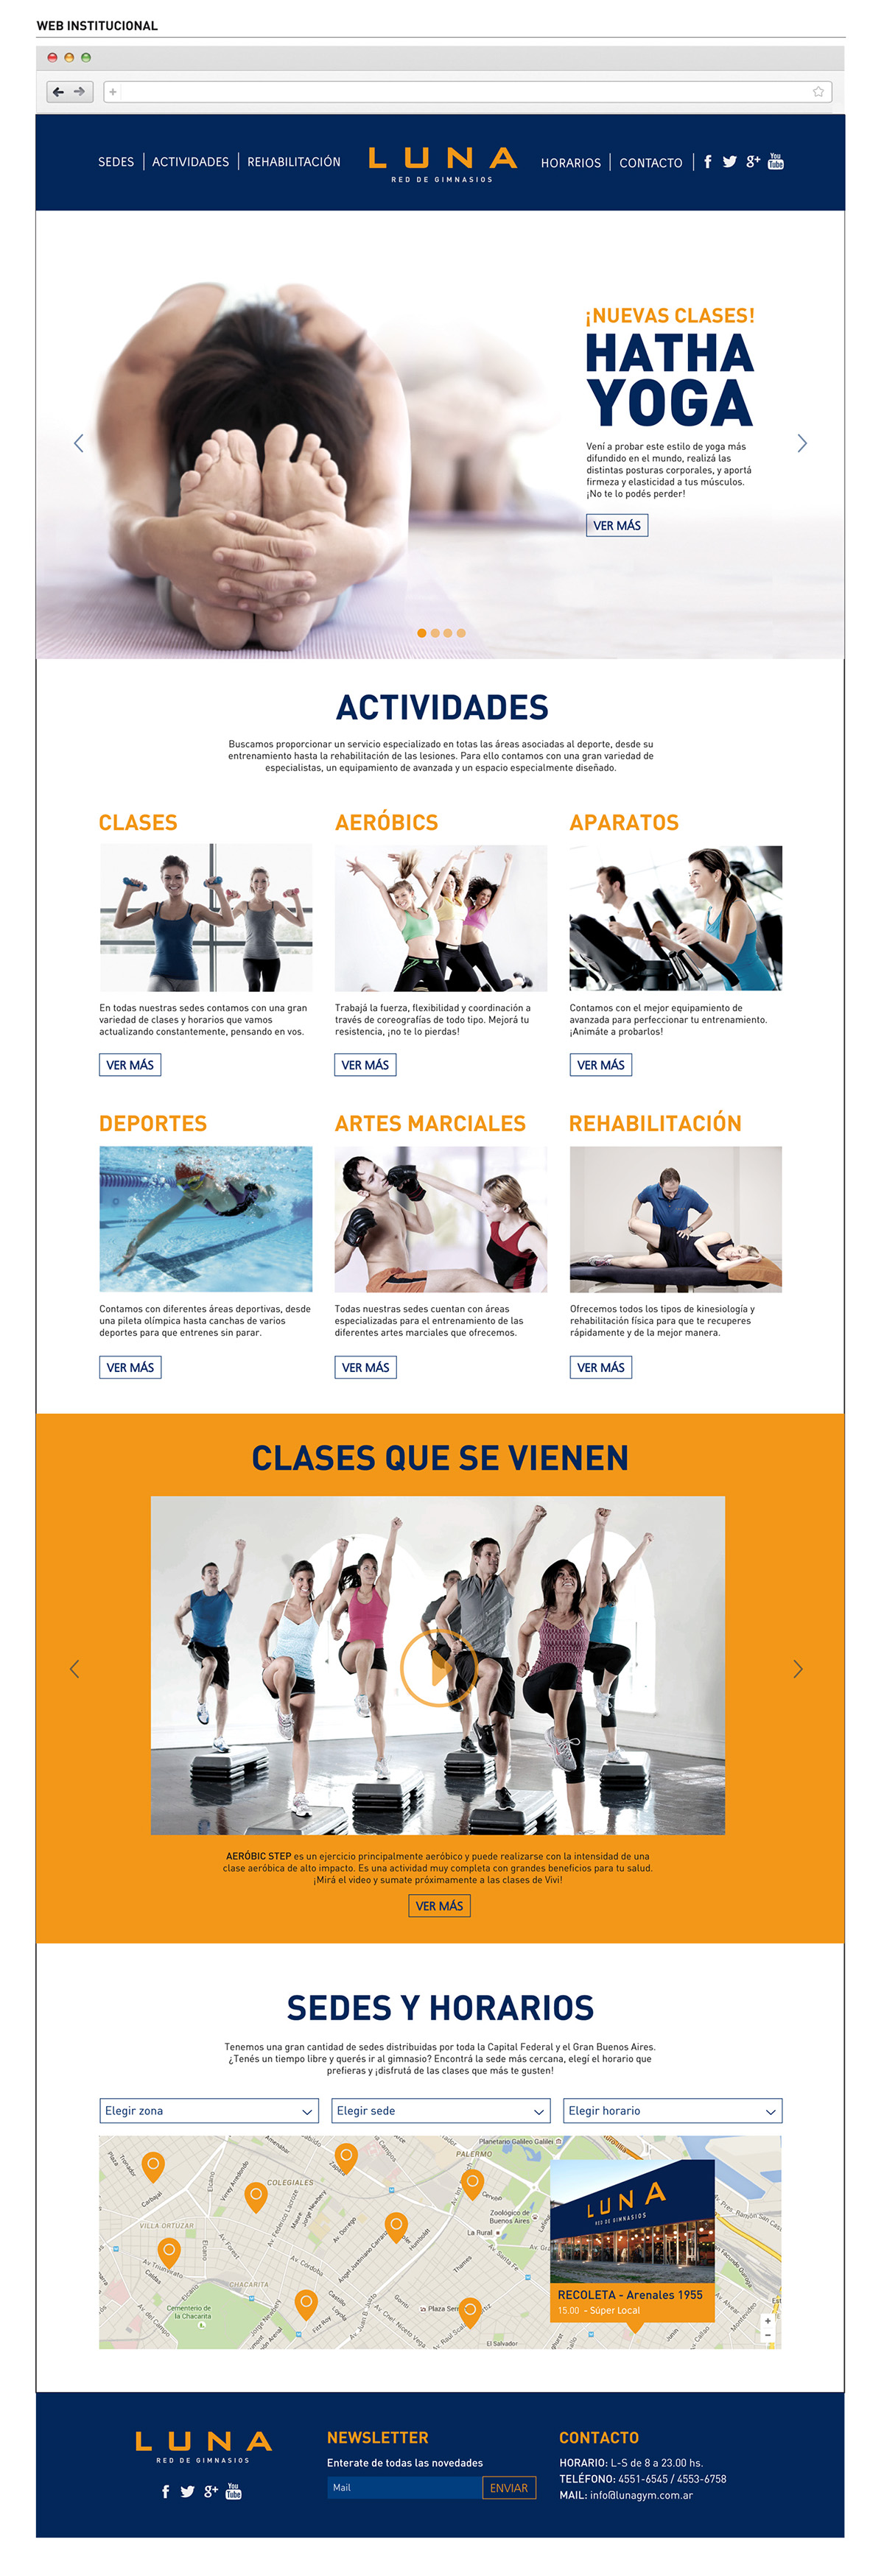 diseño institucional identidad gym fitness kinesiologia sport rehab diseño de marca